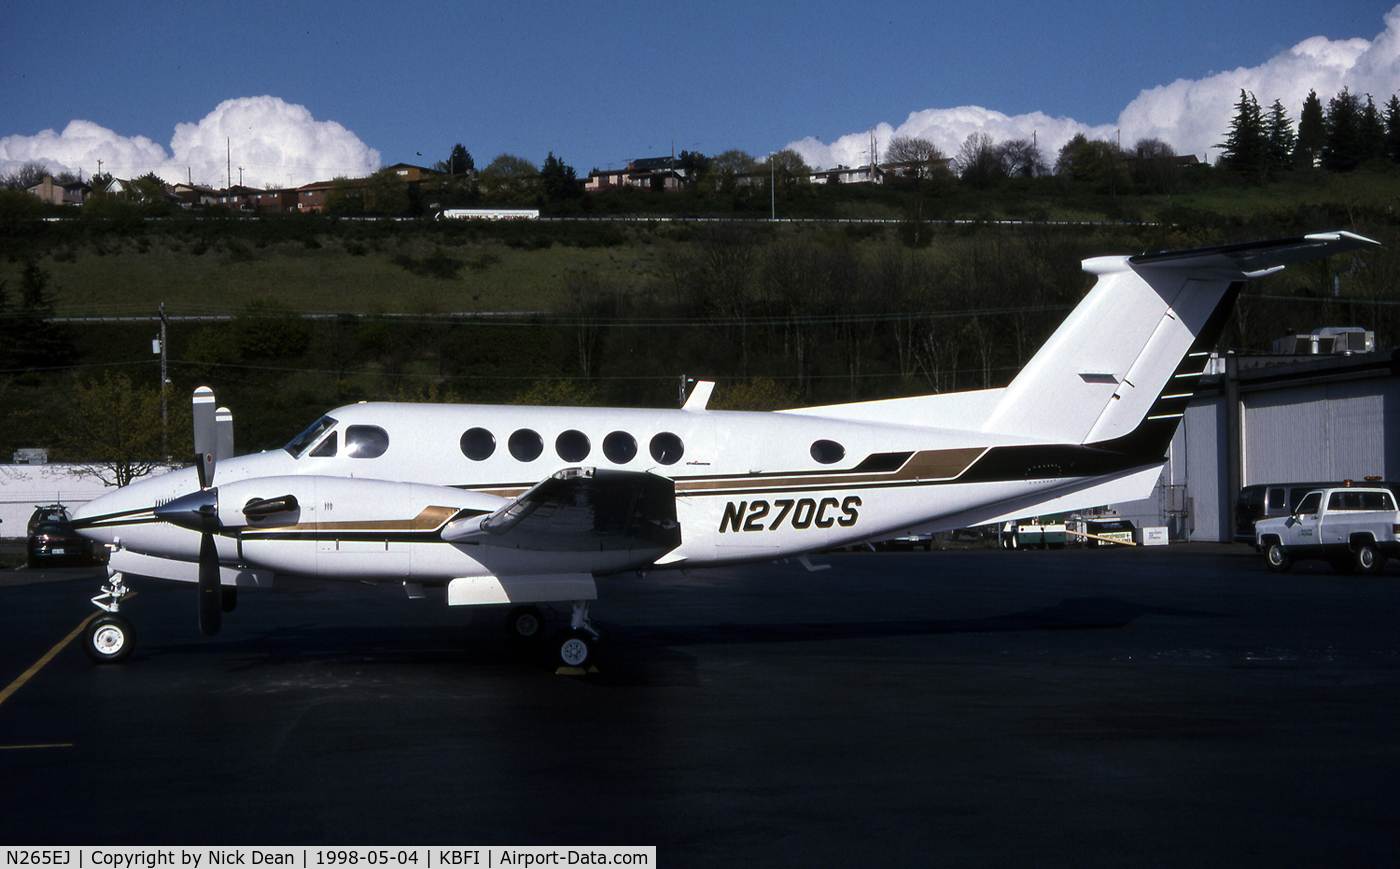 N265EJ, 1981 Beech B200 King Air C/N BB-911, KBFI (Seen as N270CS prior to being re-registered N265EJ)